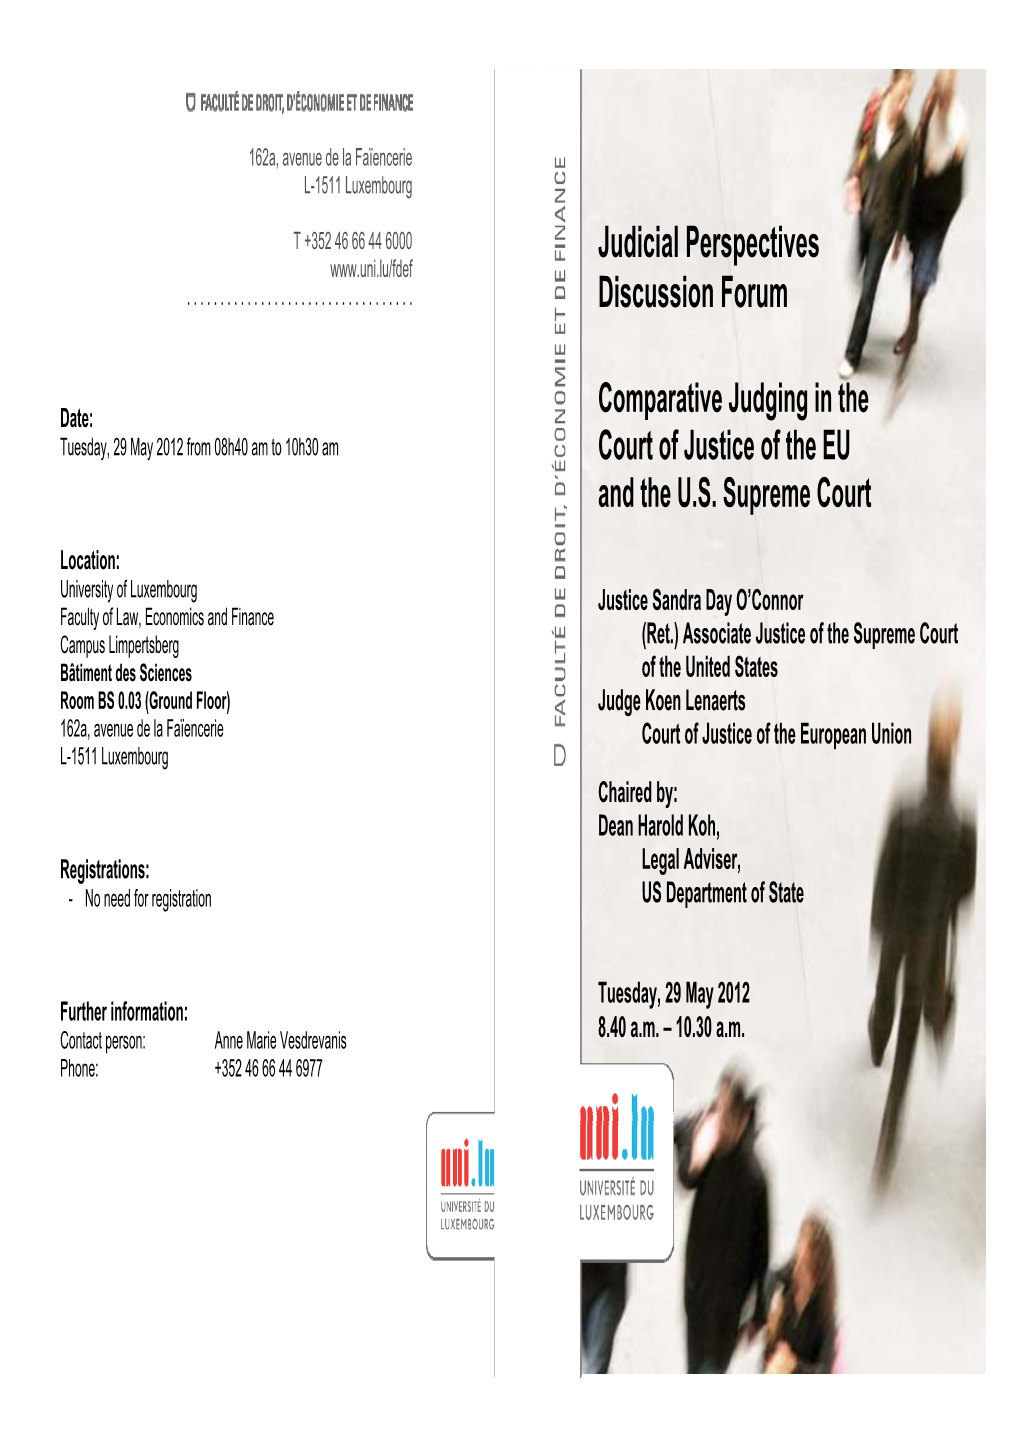 Judicial Perspectives Discussion Forum